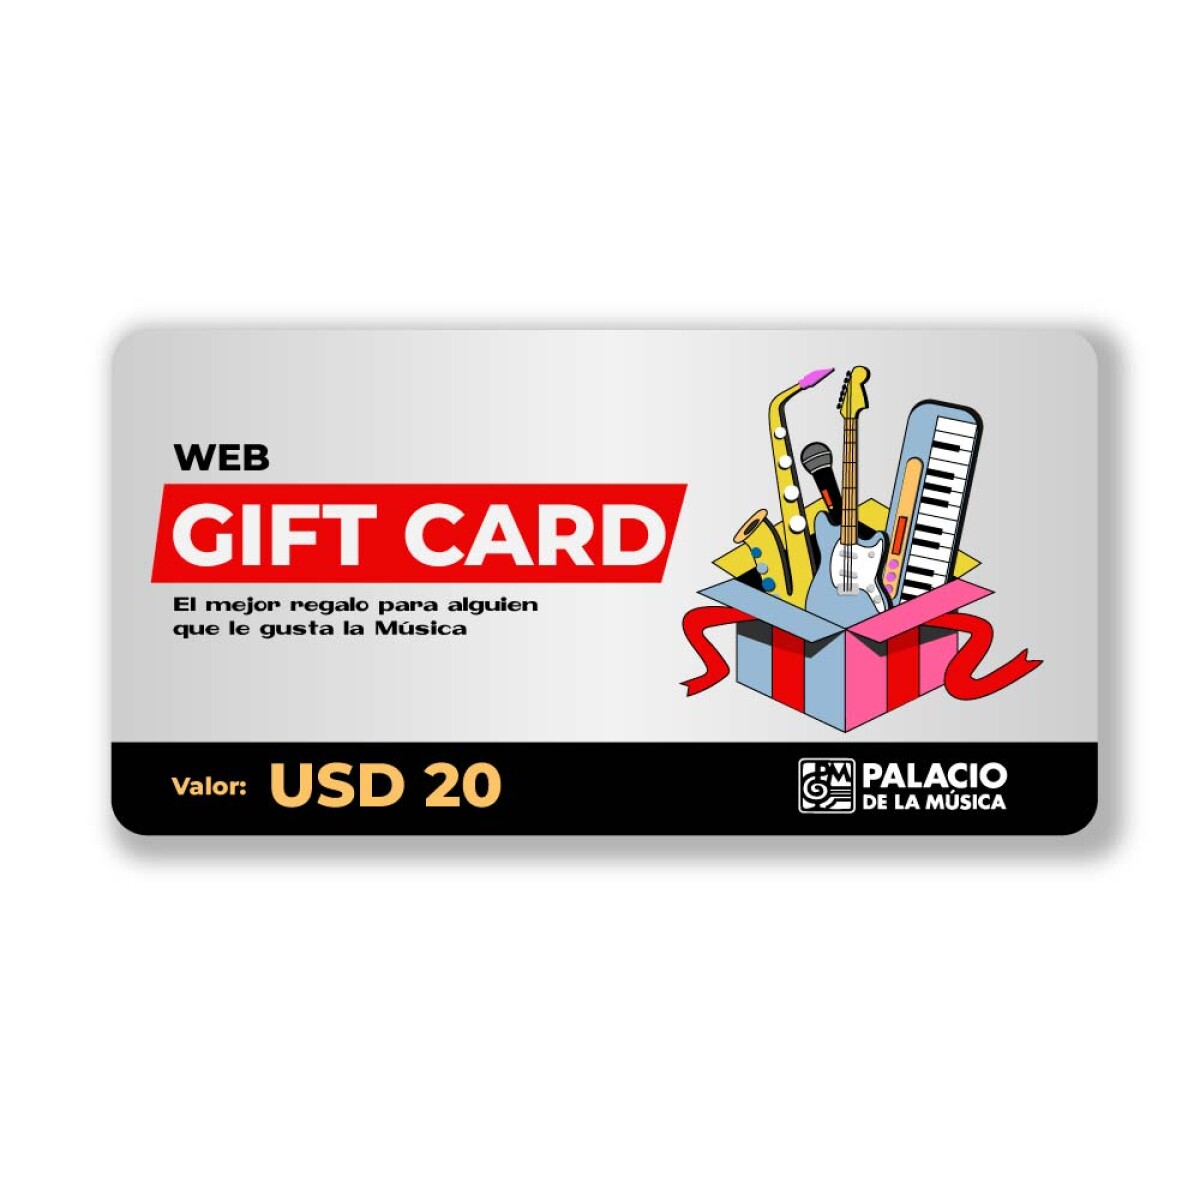 Web Gift Card | Valor Usd 20 